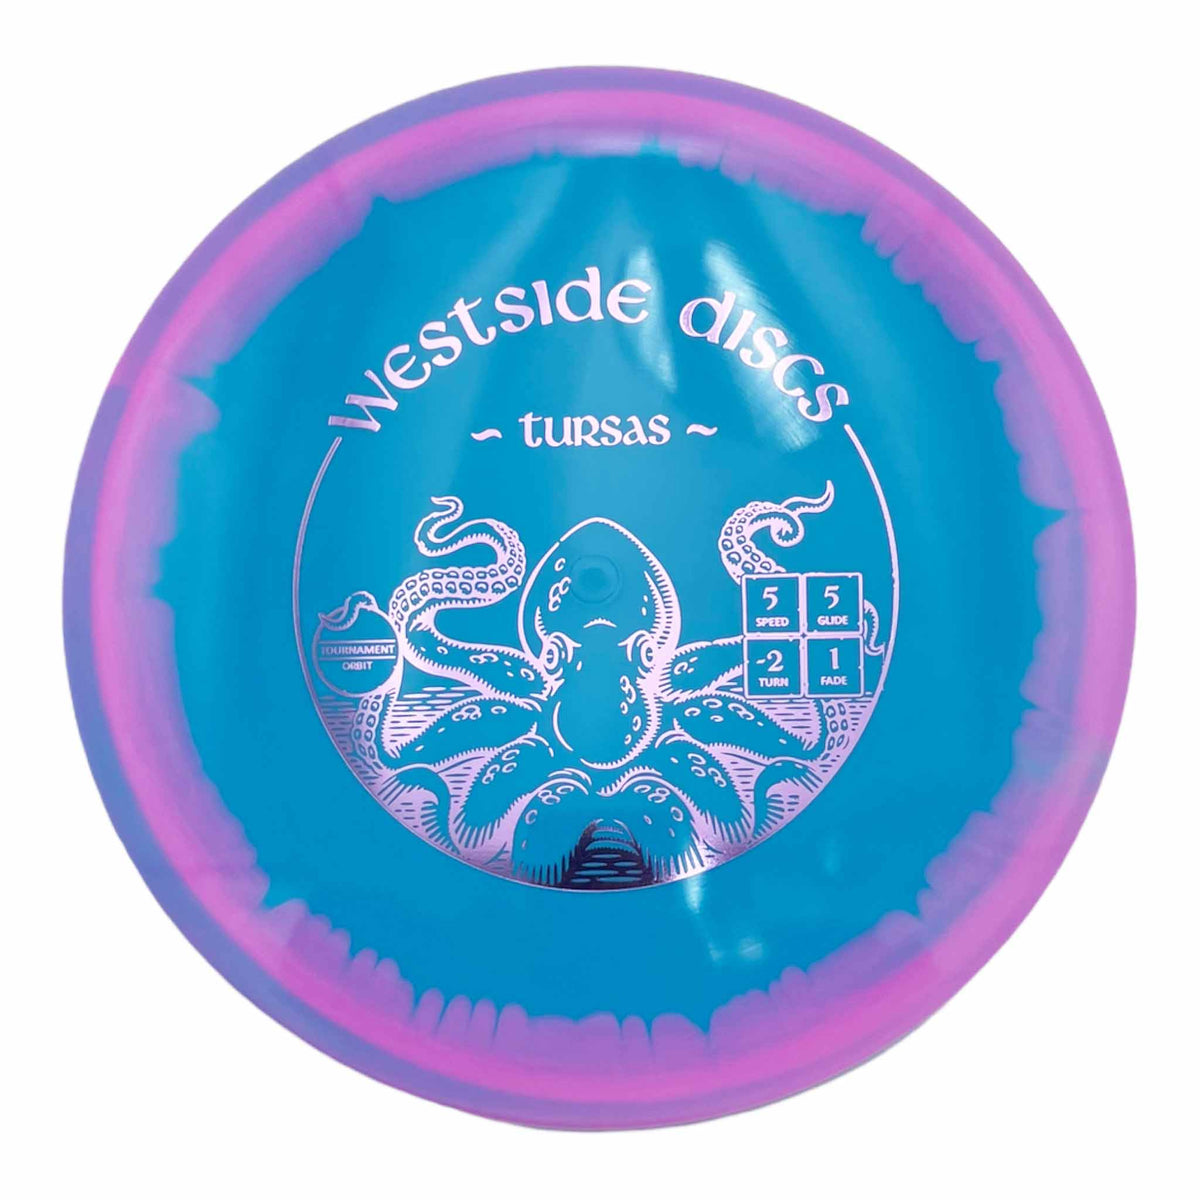 Westside Discs Tournament Orbit Tursas midrange - Blue / Pink stamp